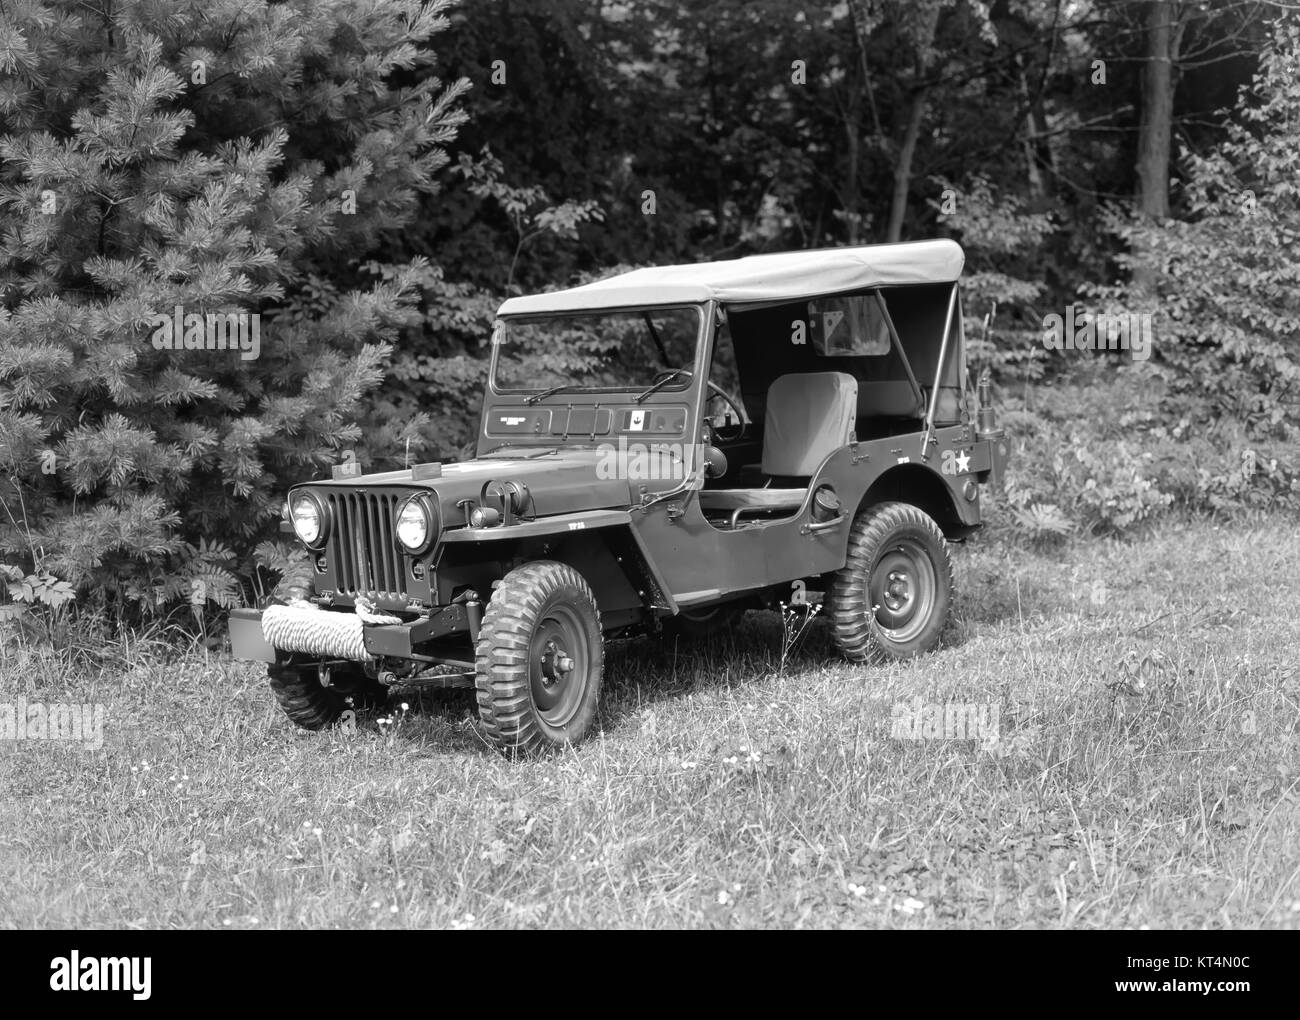 1952 Willys M38 Military Vehicle Stock Photo